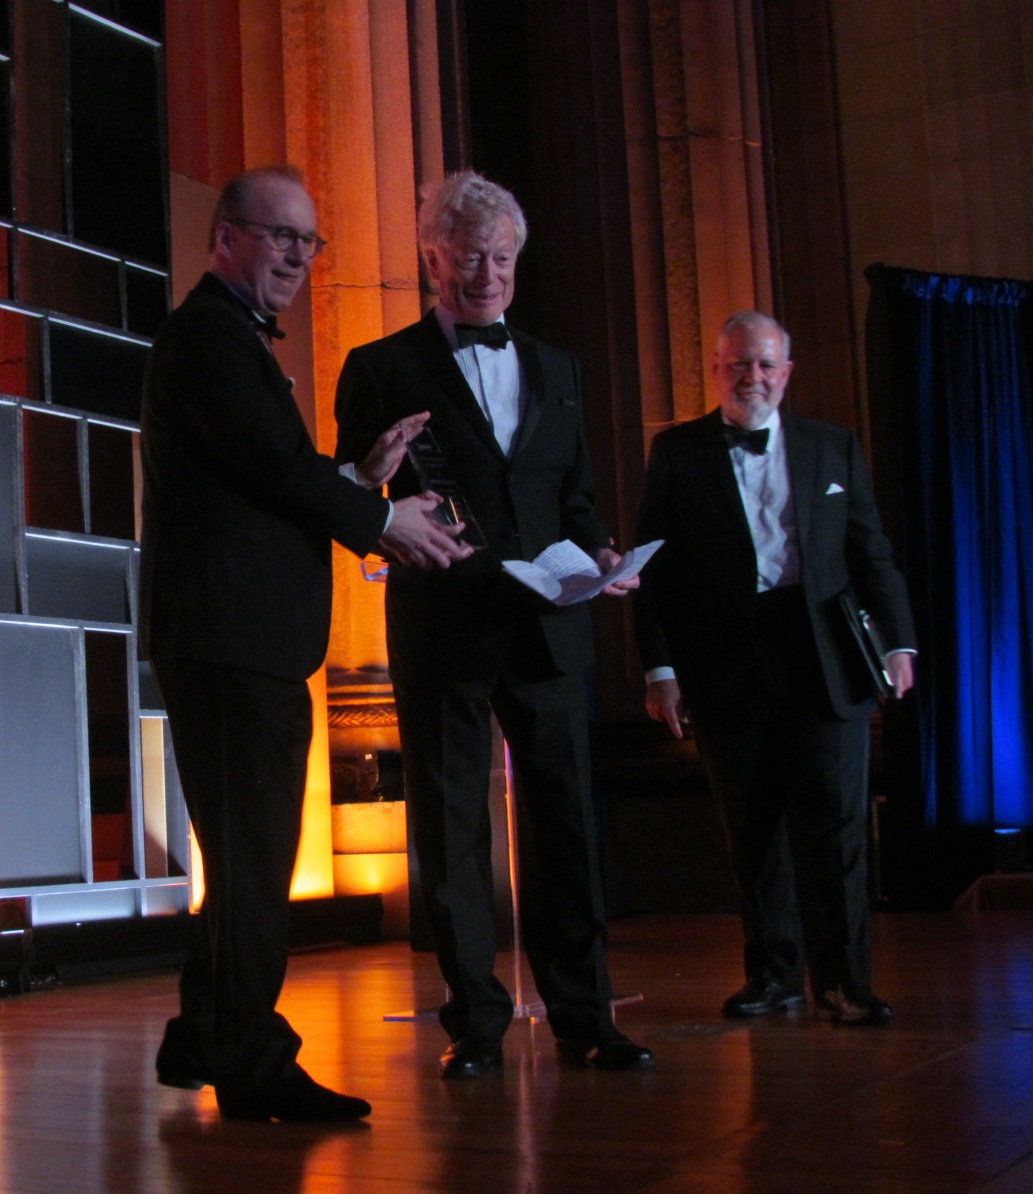 Sir Roger Scruton receives his award, alongside Roger Kimball and Larry Arnn.